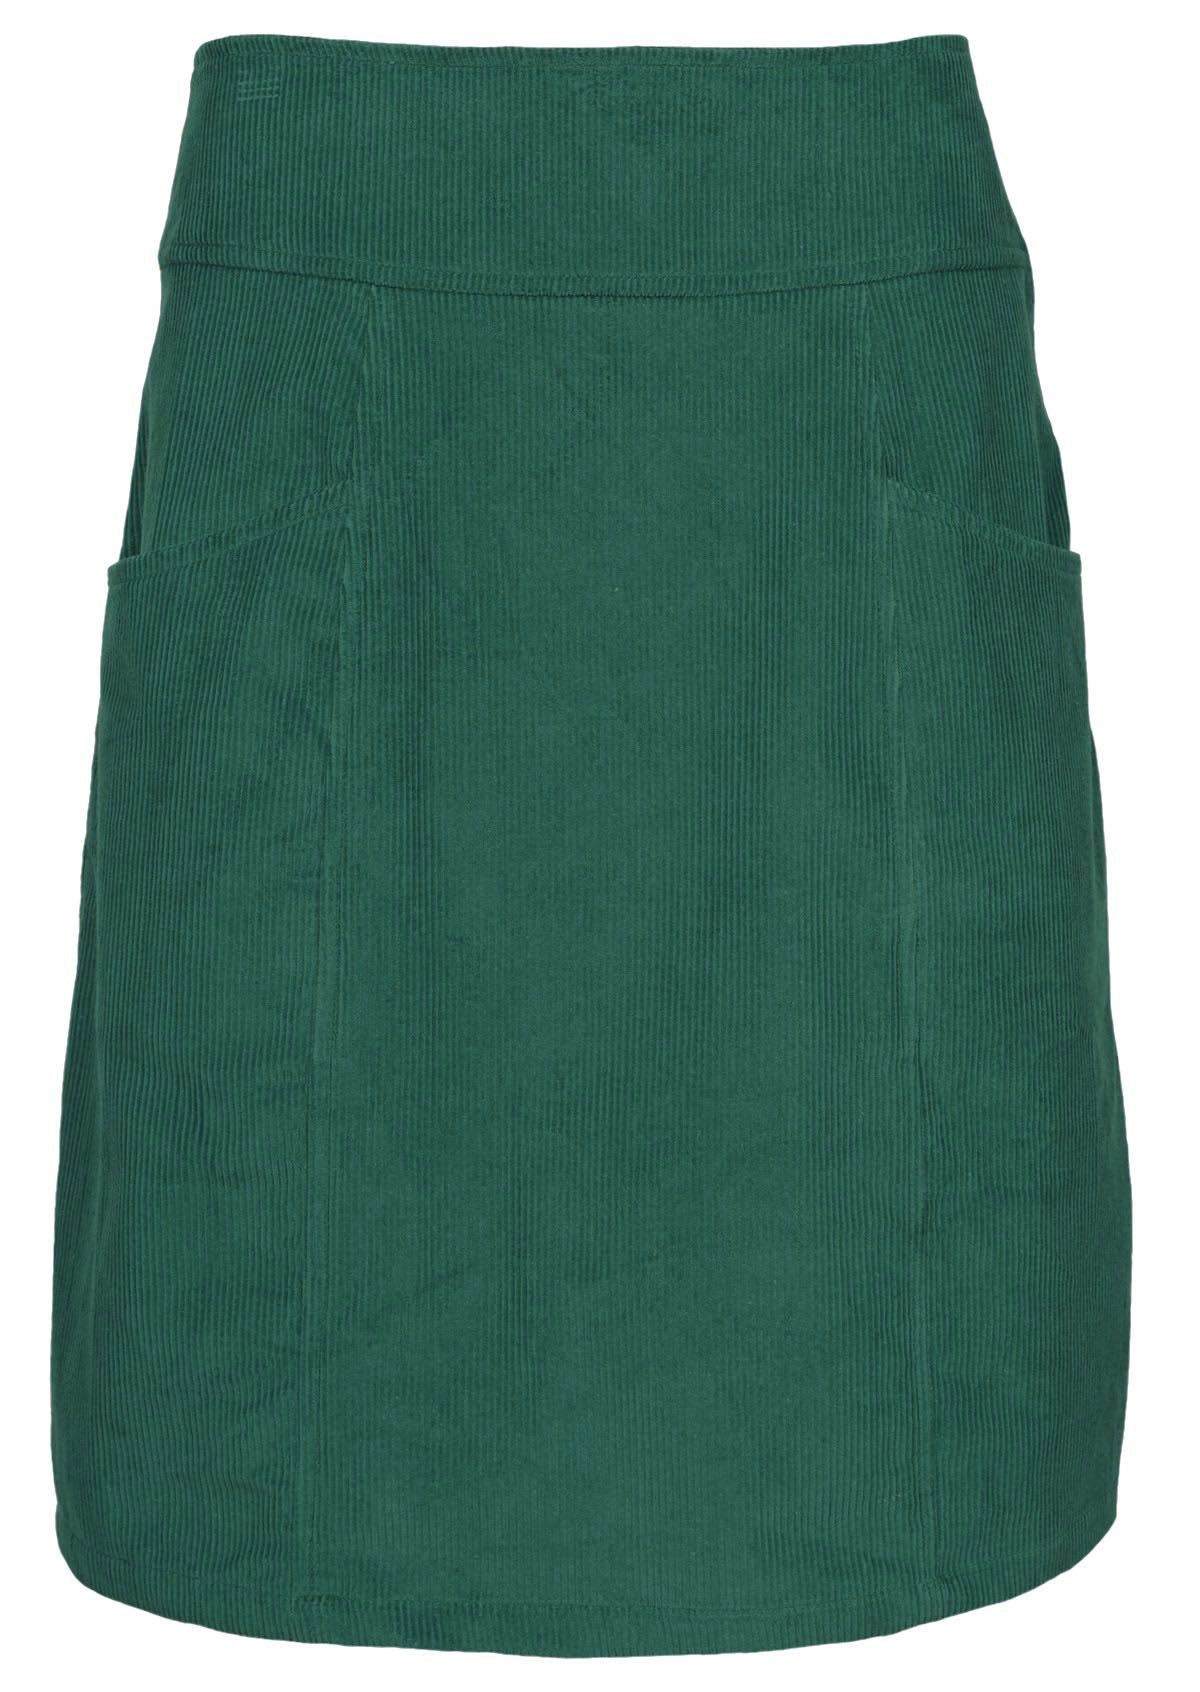 100% cotton corduroy mid length skirt in Hunter Green. 